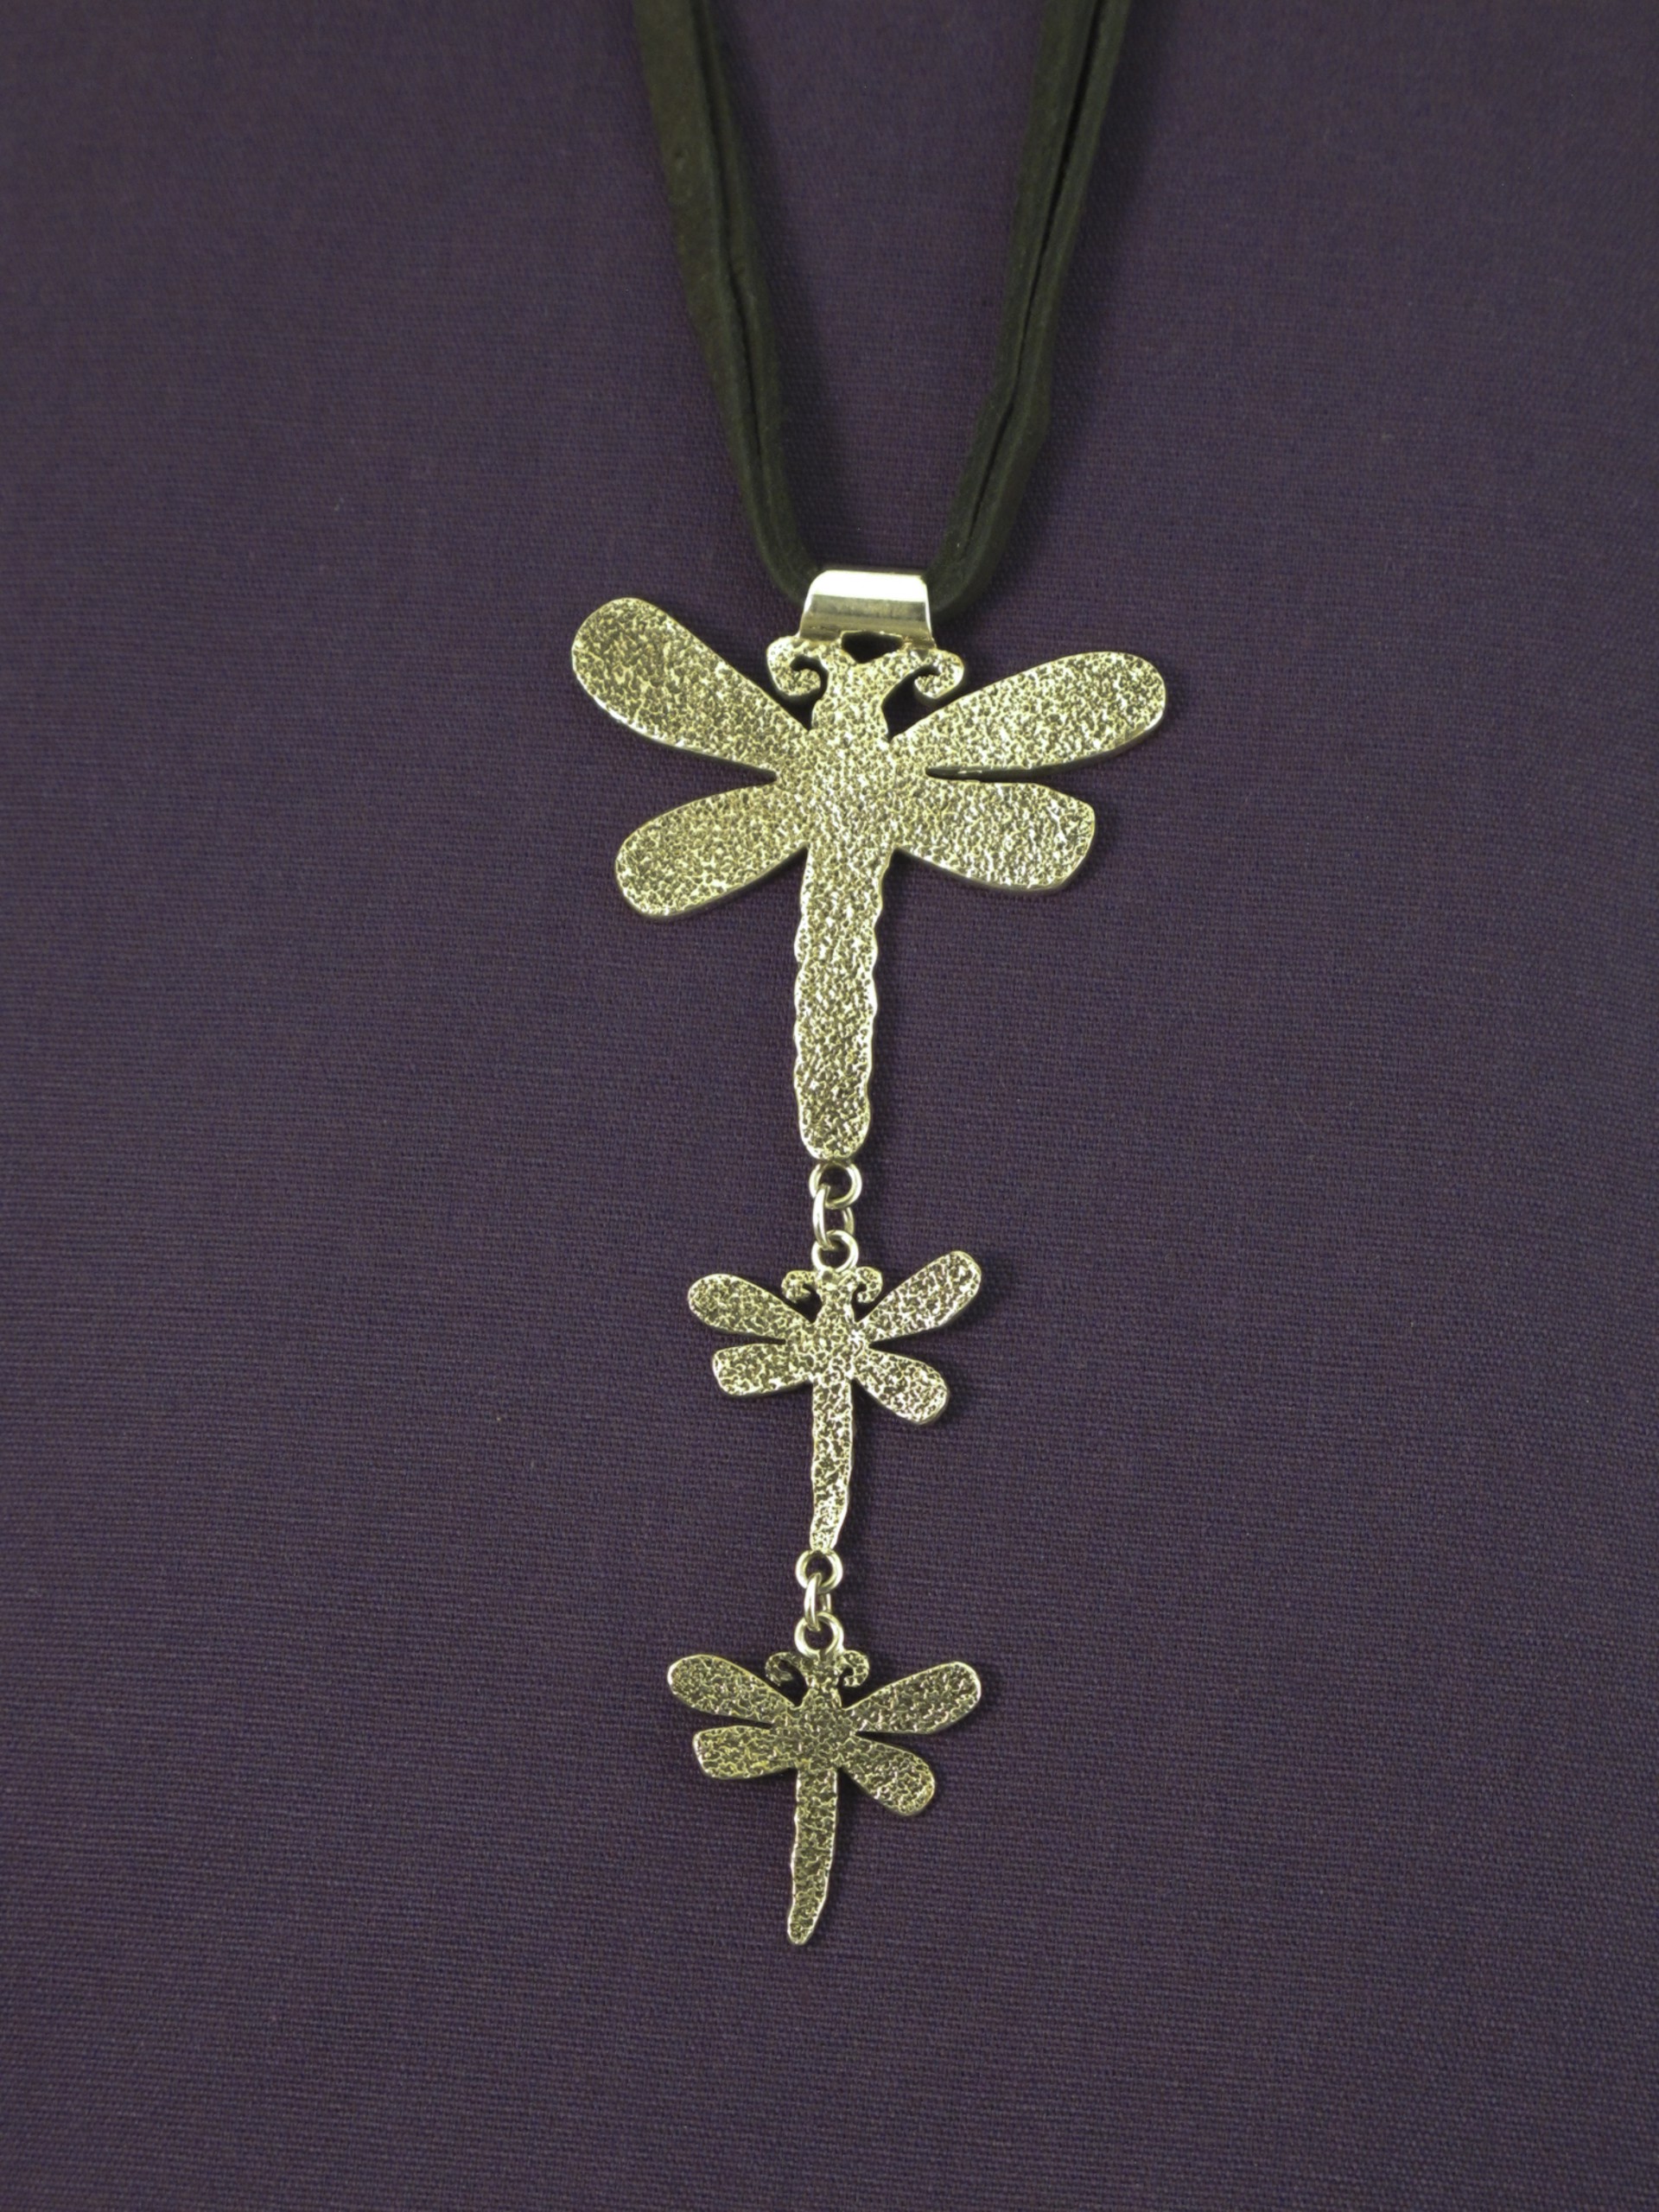 Dragonfly Drop pendant by Melanie Yazzie